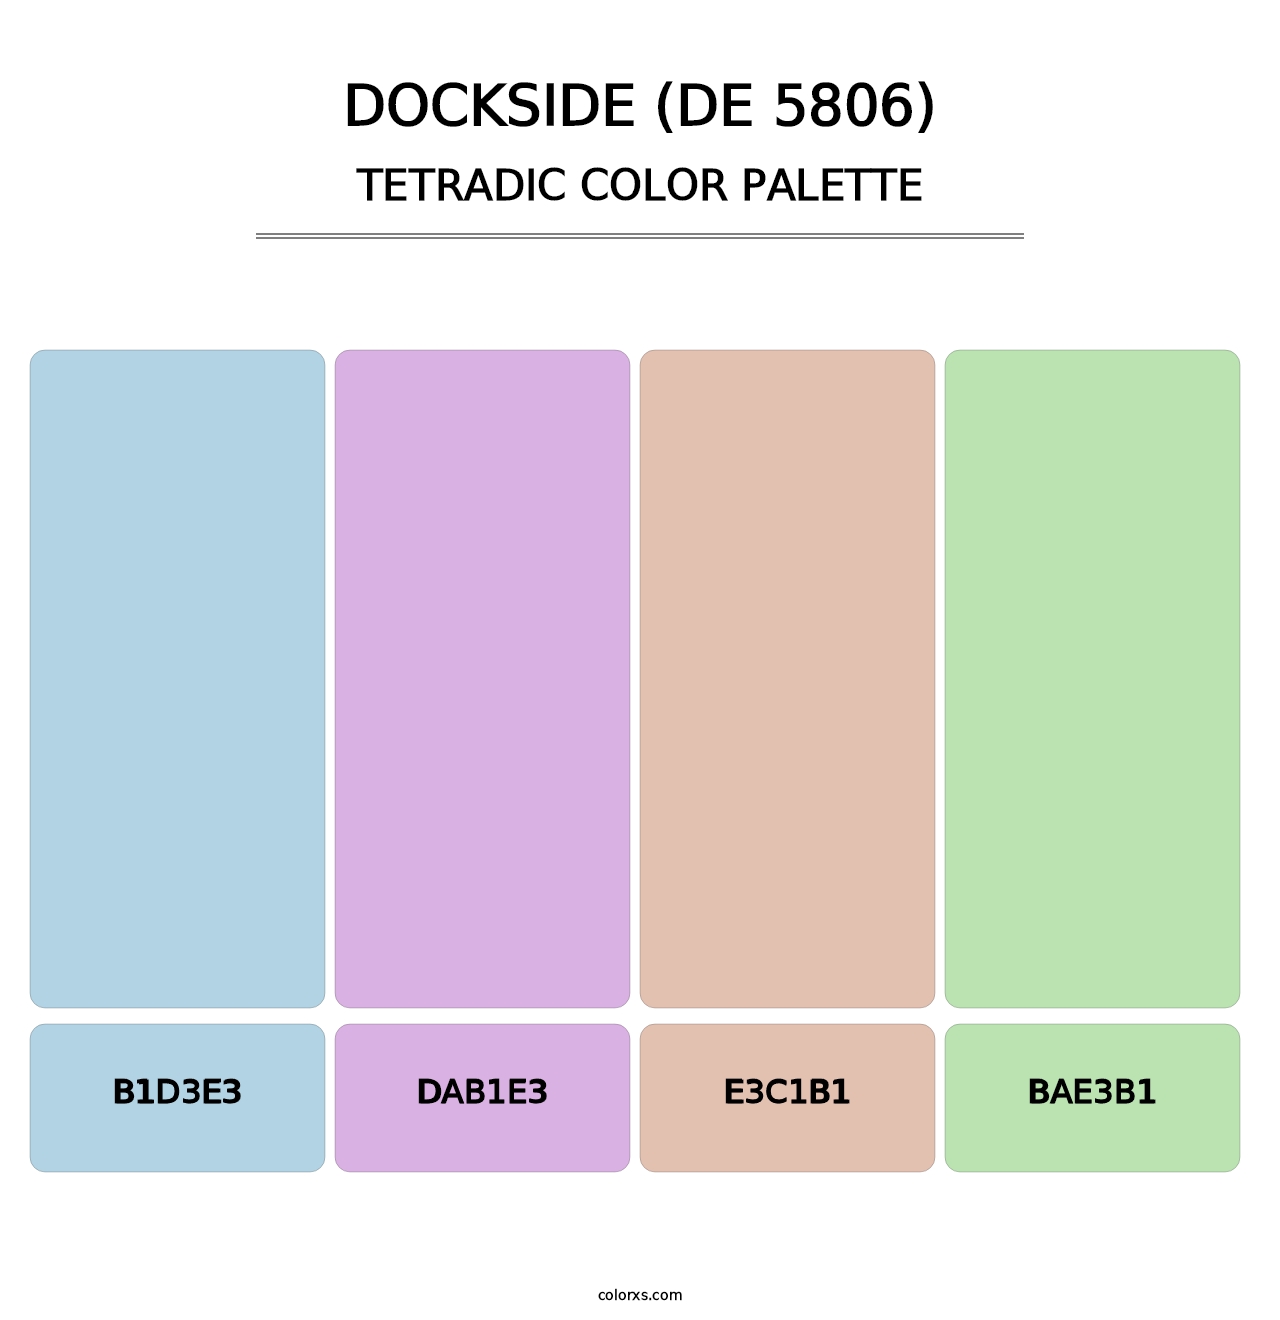 Dockside (DE 5806) - Tetradic Color Palette